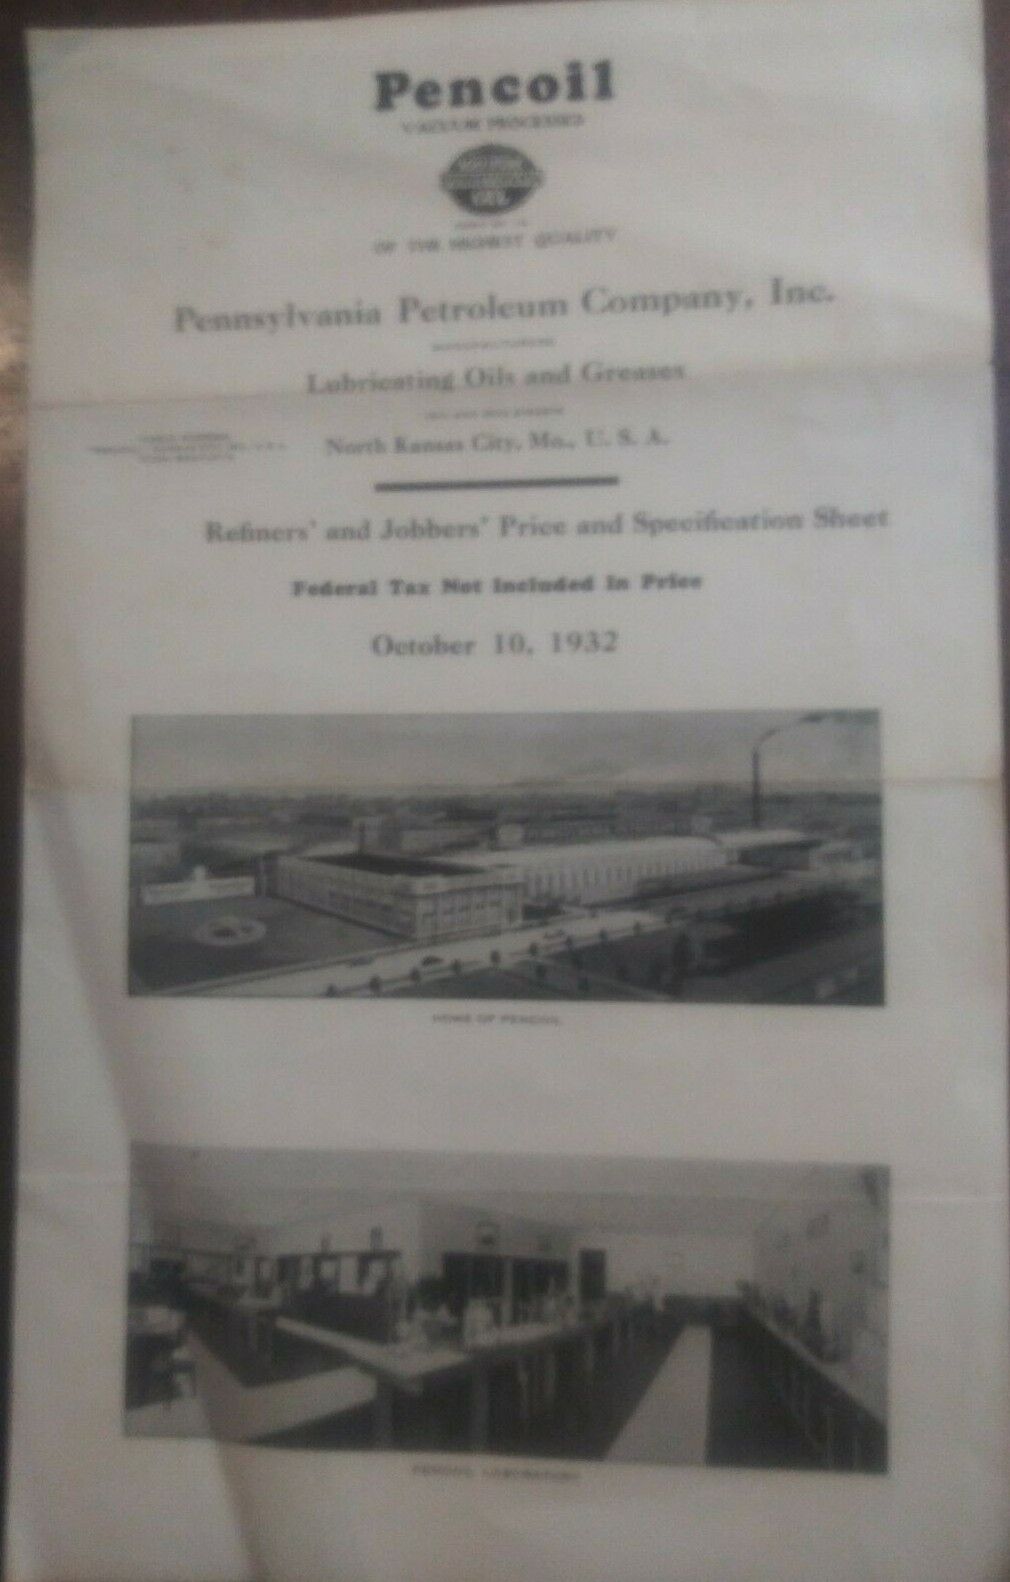 1932 Pencoil price & spec sheet / brochure, Pennsylvania Petroleum Co.